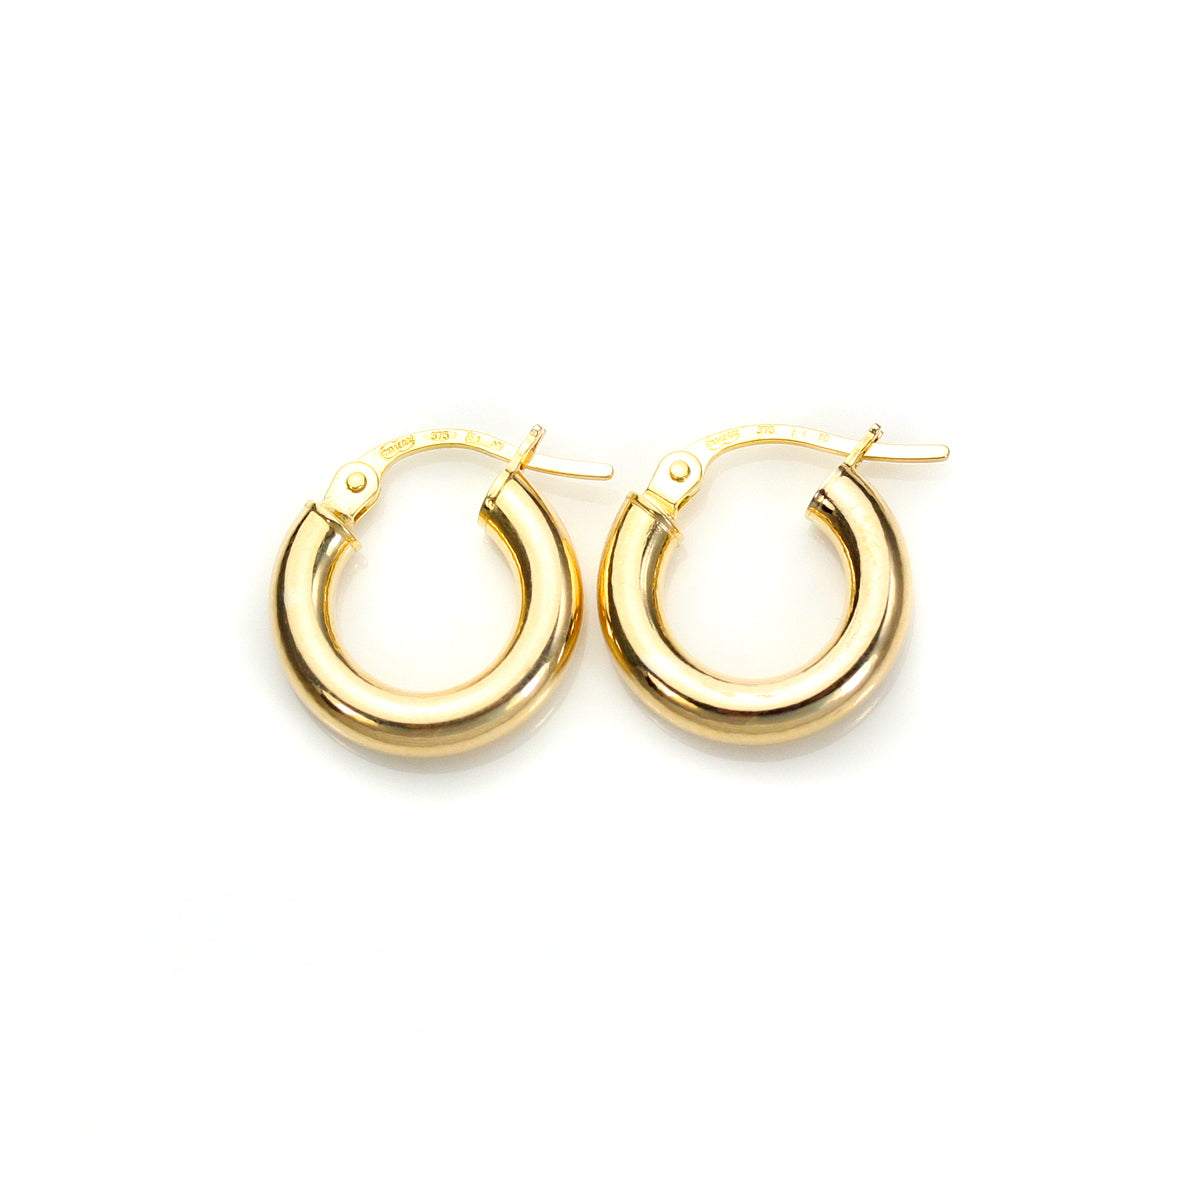 9ct Yellow Gold Plain Creole Earrings